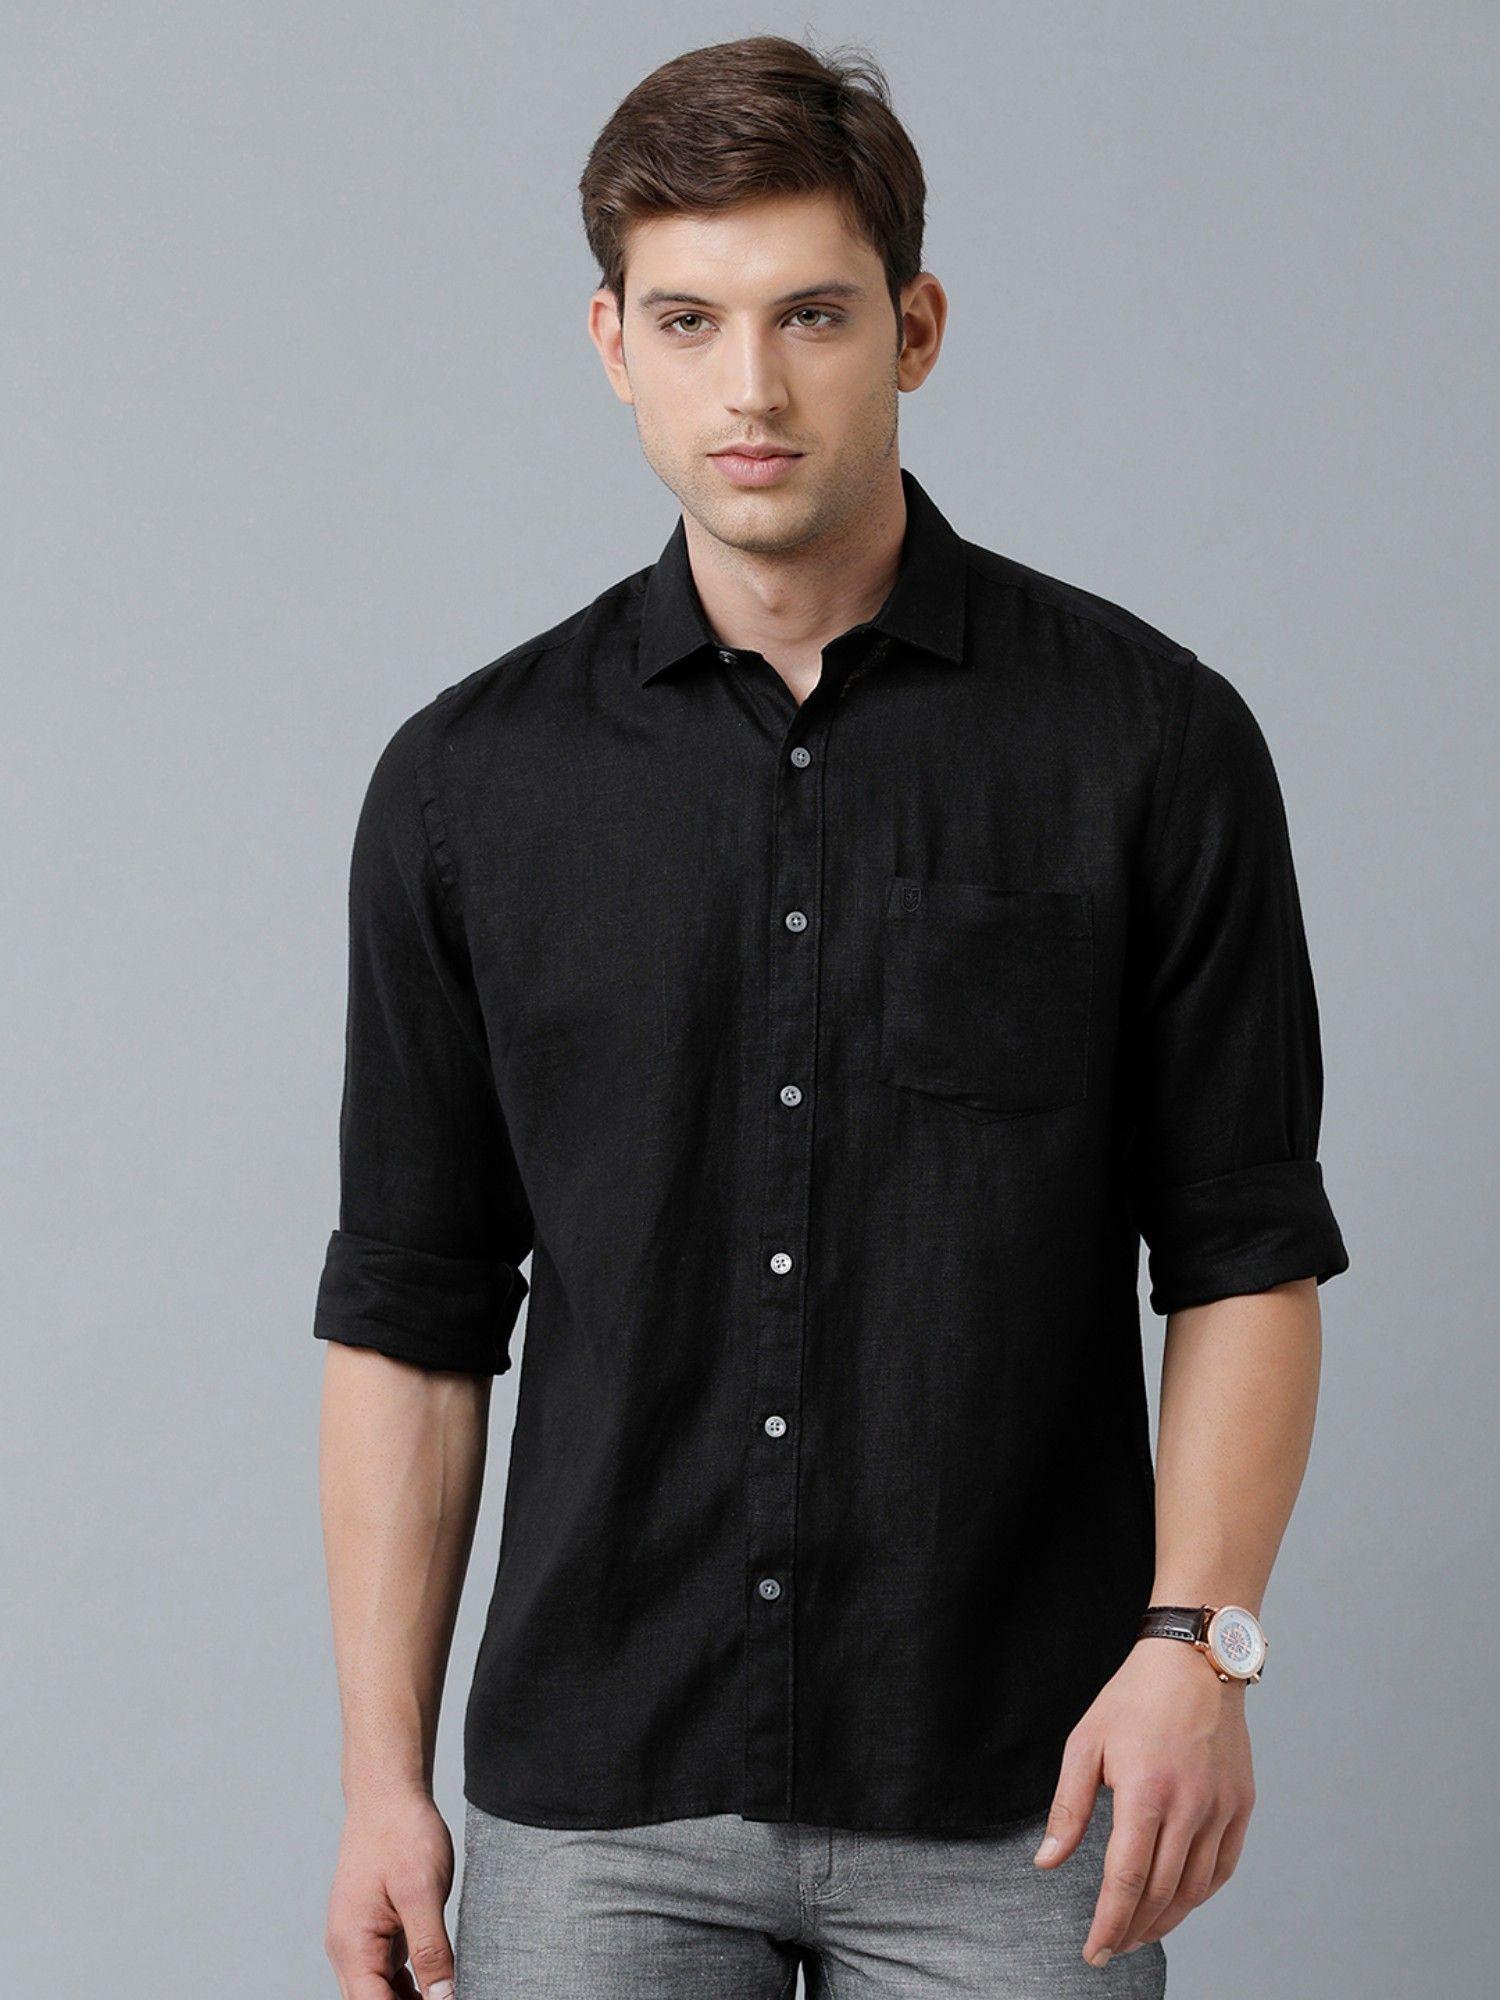 men's-pure-linen-black-solid-regular-fit-full-sleeve-casual-shirt